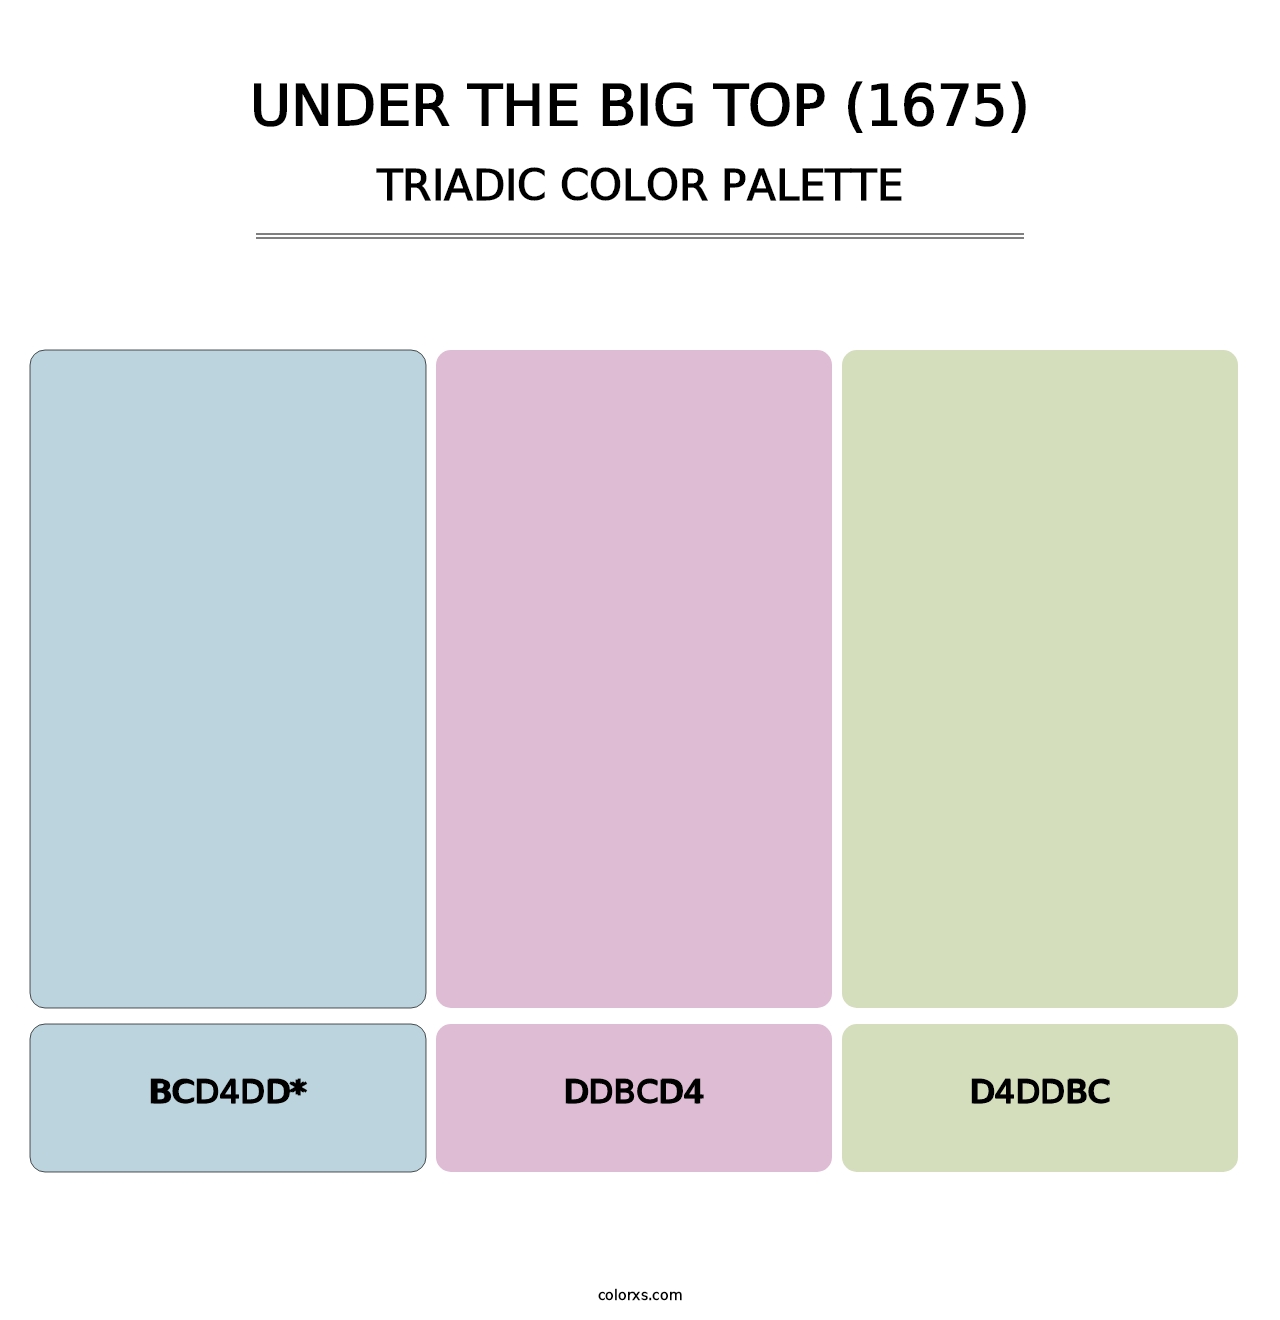 Under the Big Top (1675) - Triadic Color Palette